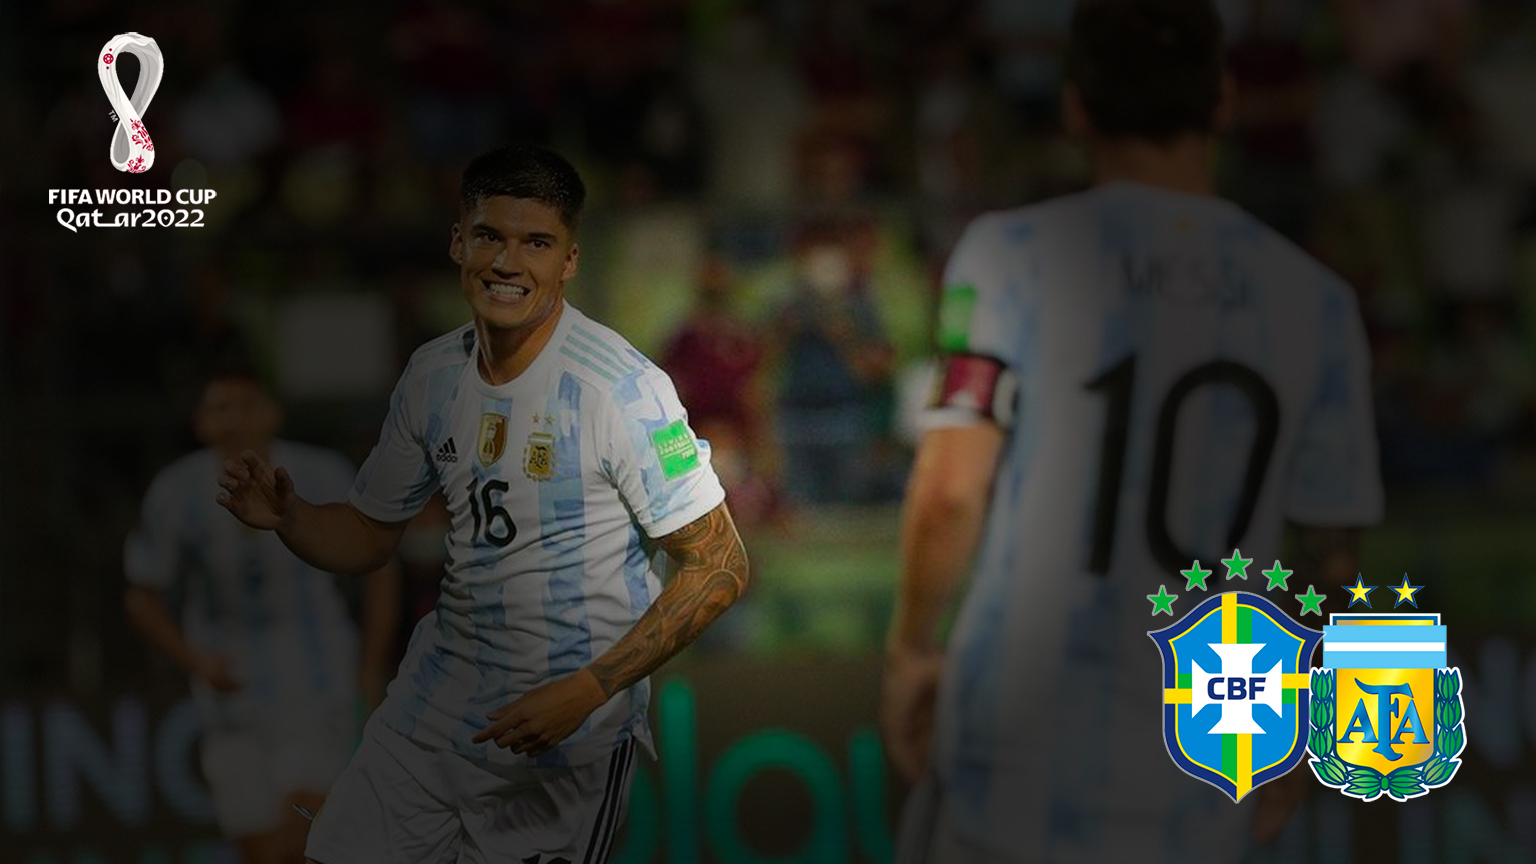 quote brasile-argentina qualificazioni mondiali qatar 2022 nazionale sudamerica scommesse sport